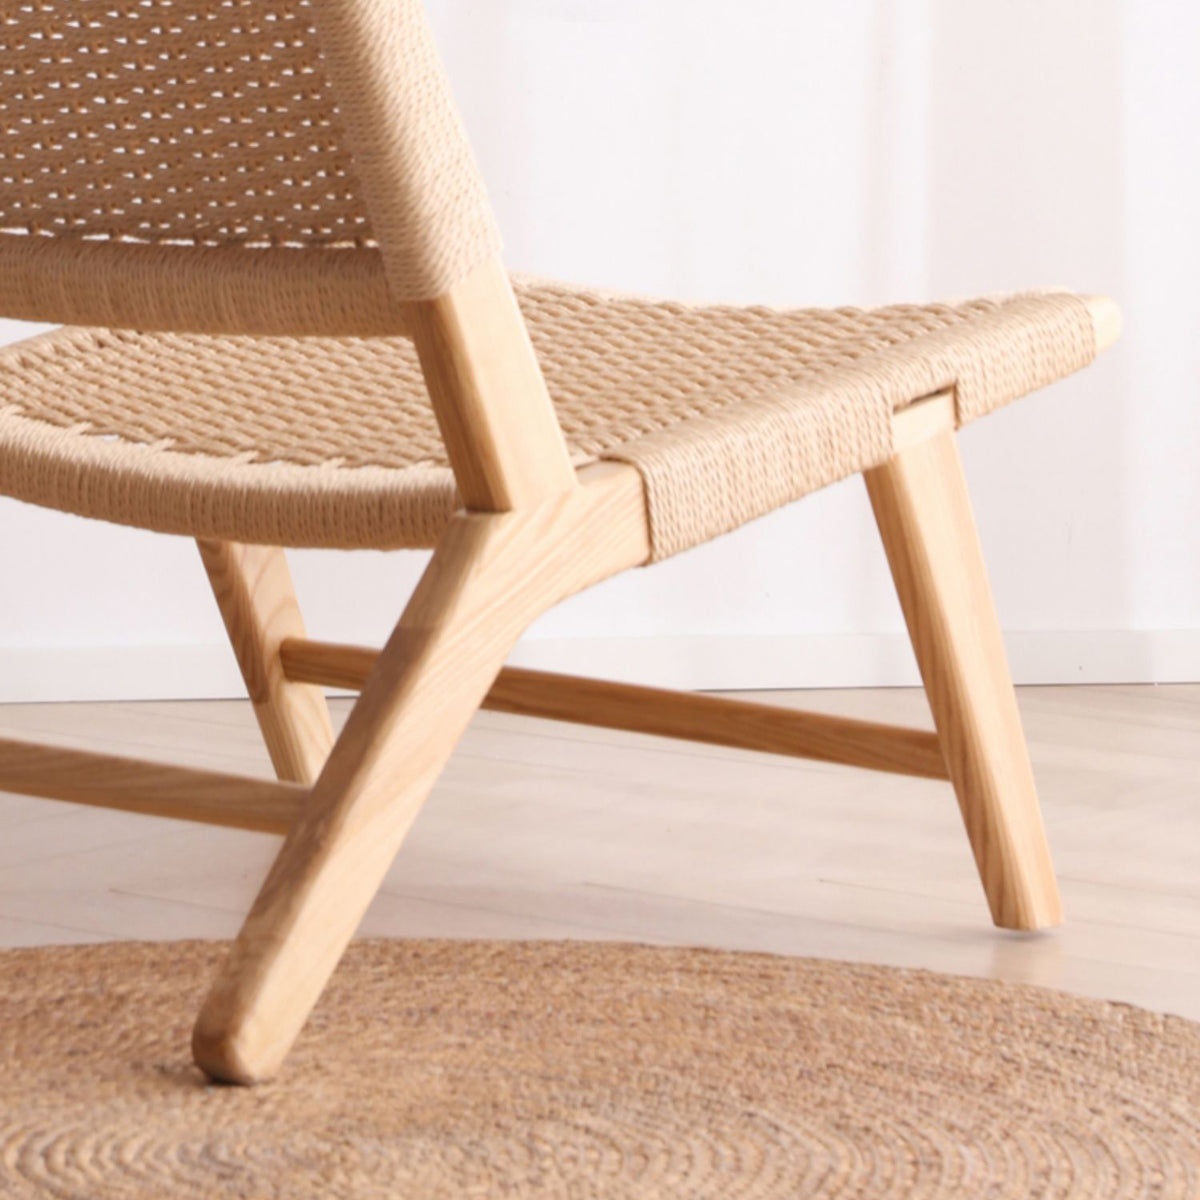 Elegant Ash Wood Chair for Modern Decor | Natural Wood Finish fcf-1480